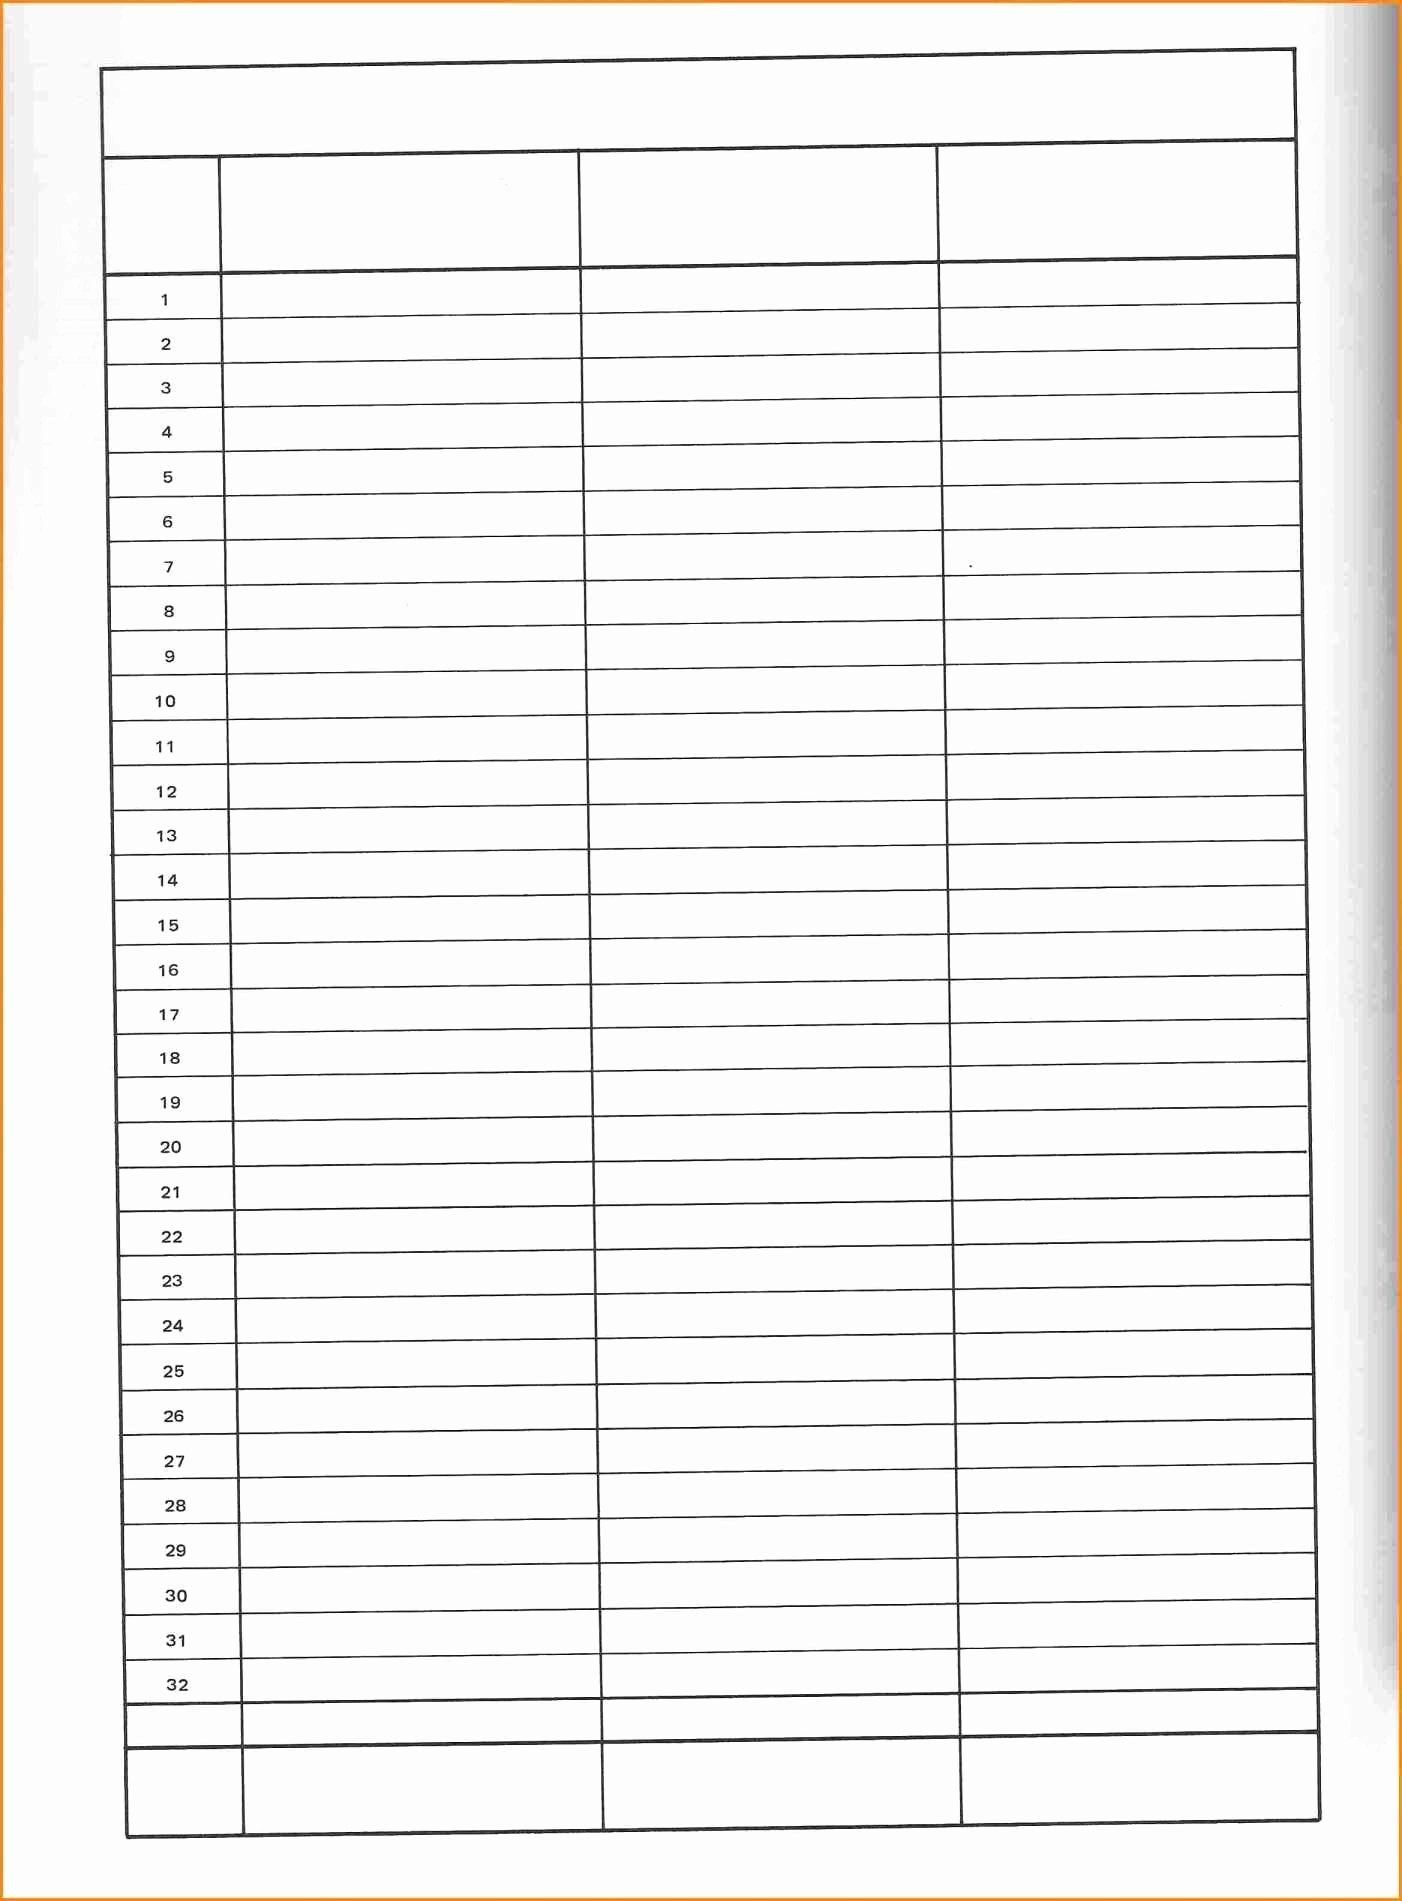 Free Printable Blank Spreadsheet Templates Fresh Blank Spreadsheet with Gridlines Inspirational Spreadsheet